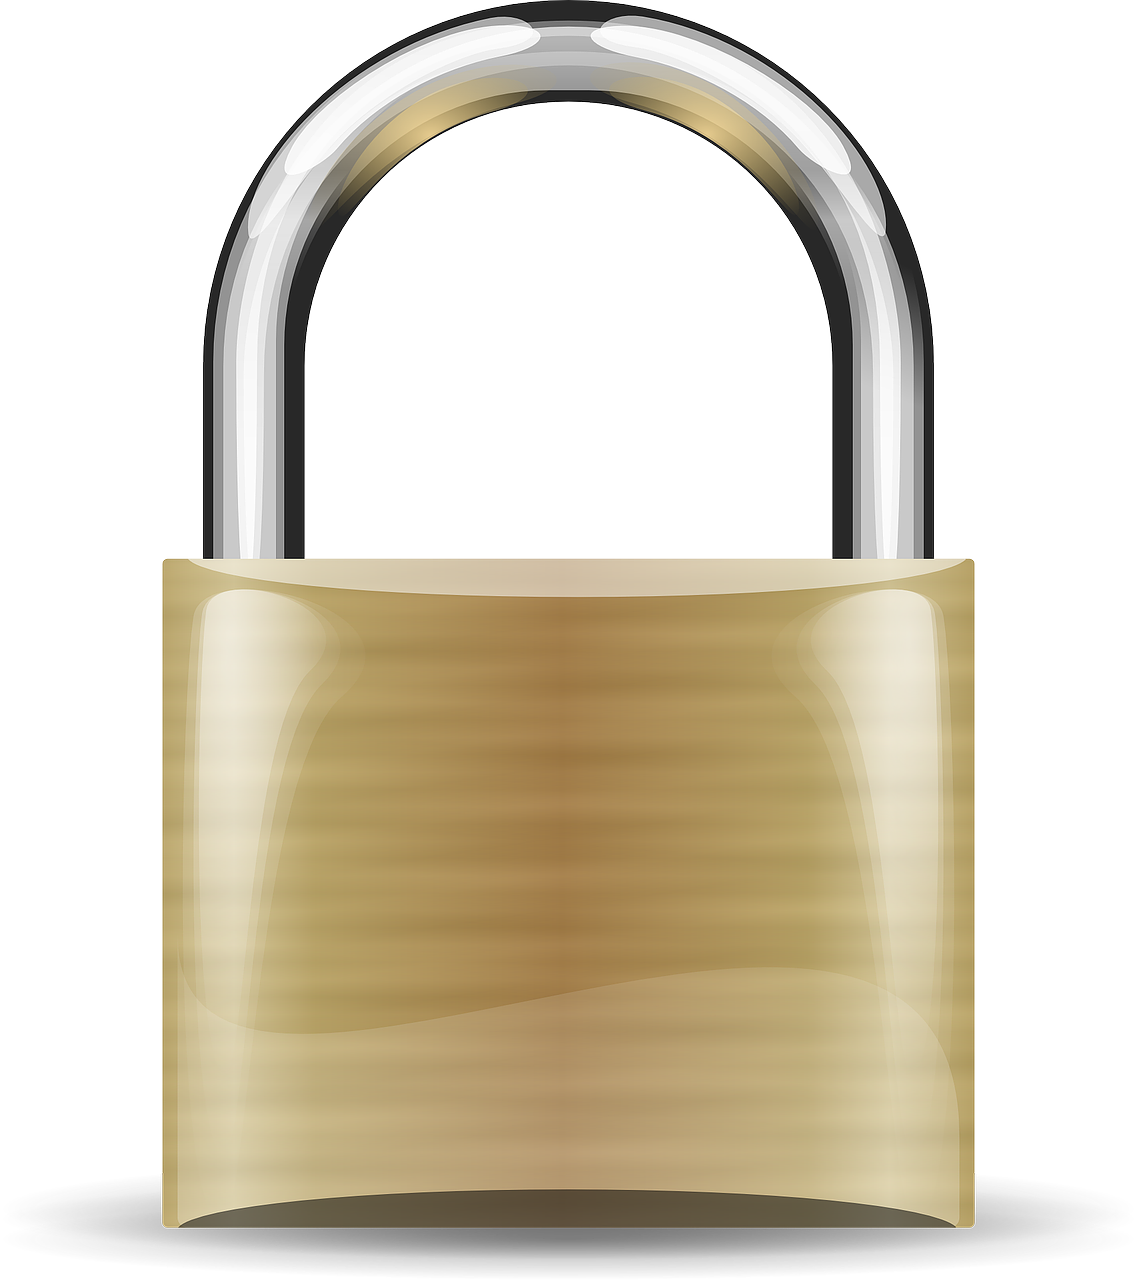 padlock portable locks free photo